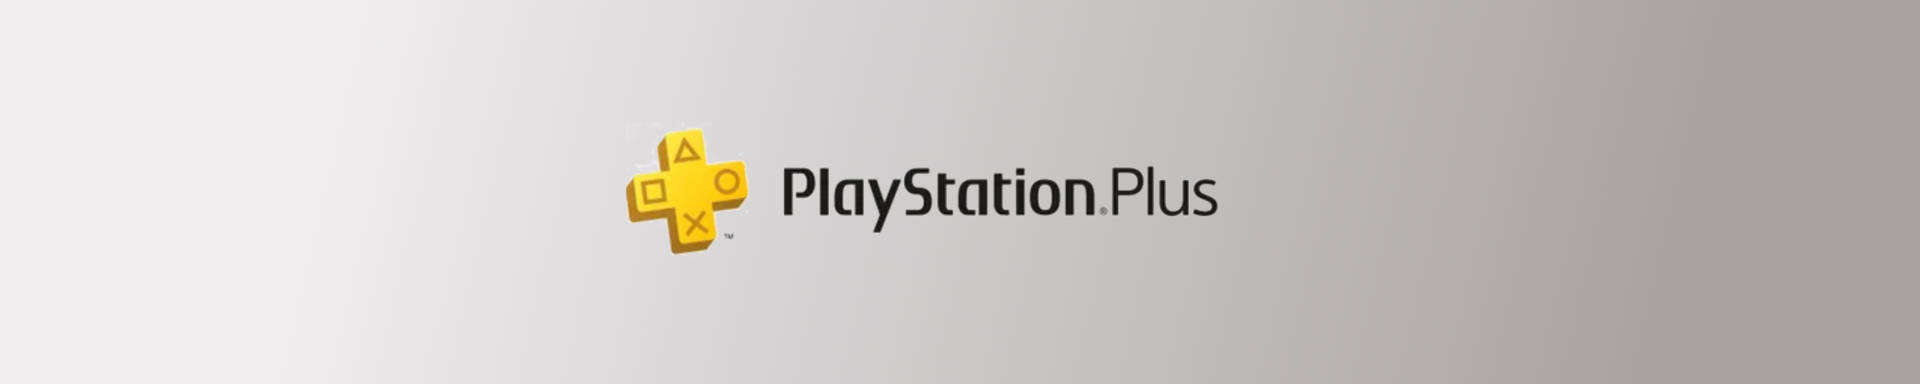 PlayStation Plus Revamp Lansman Tarihi dilimi